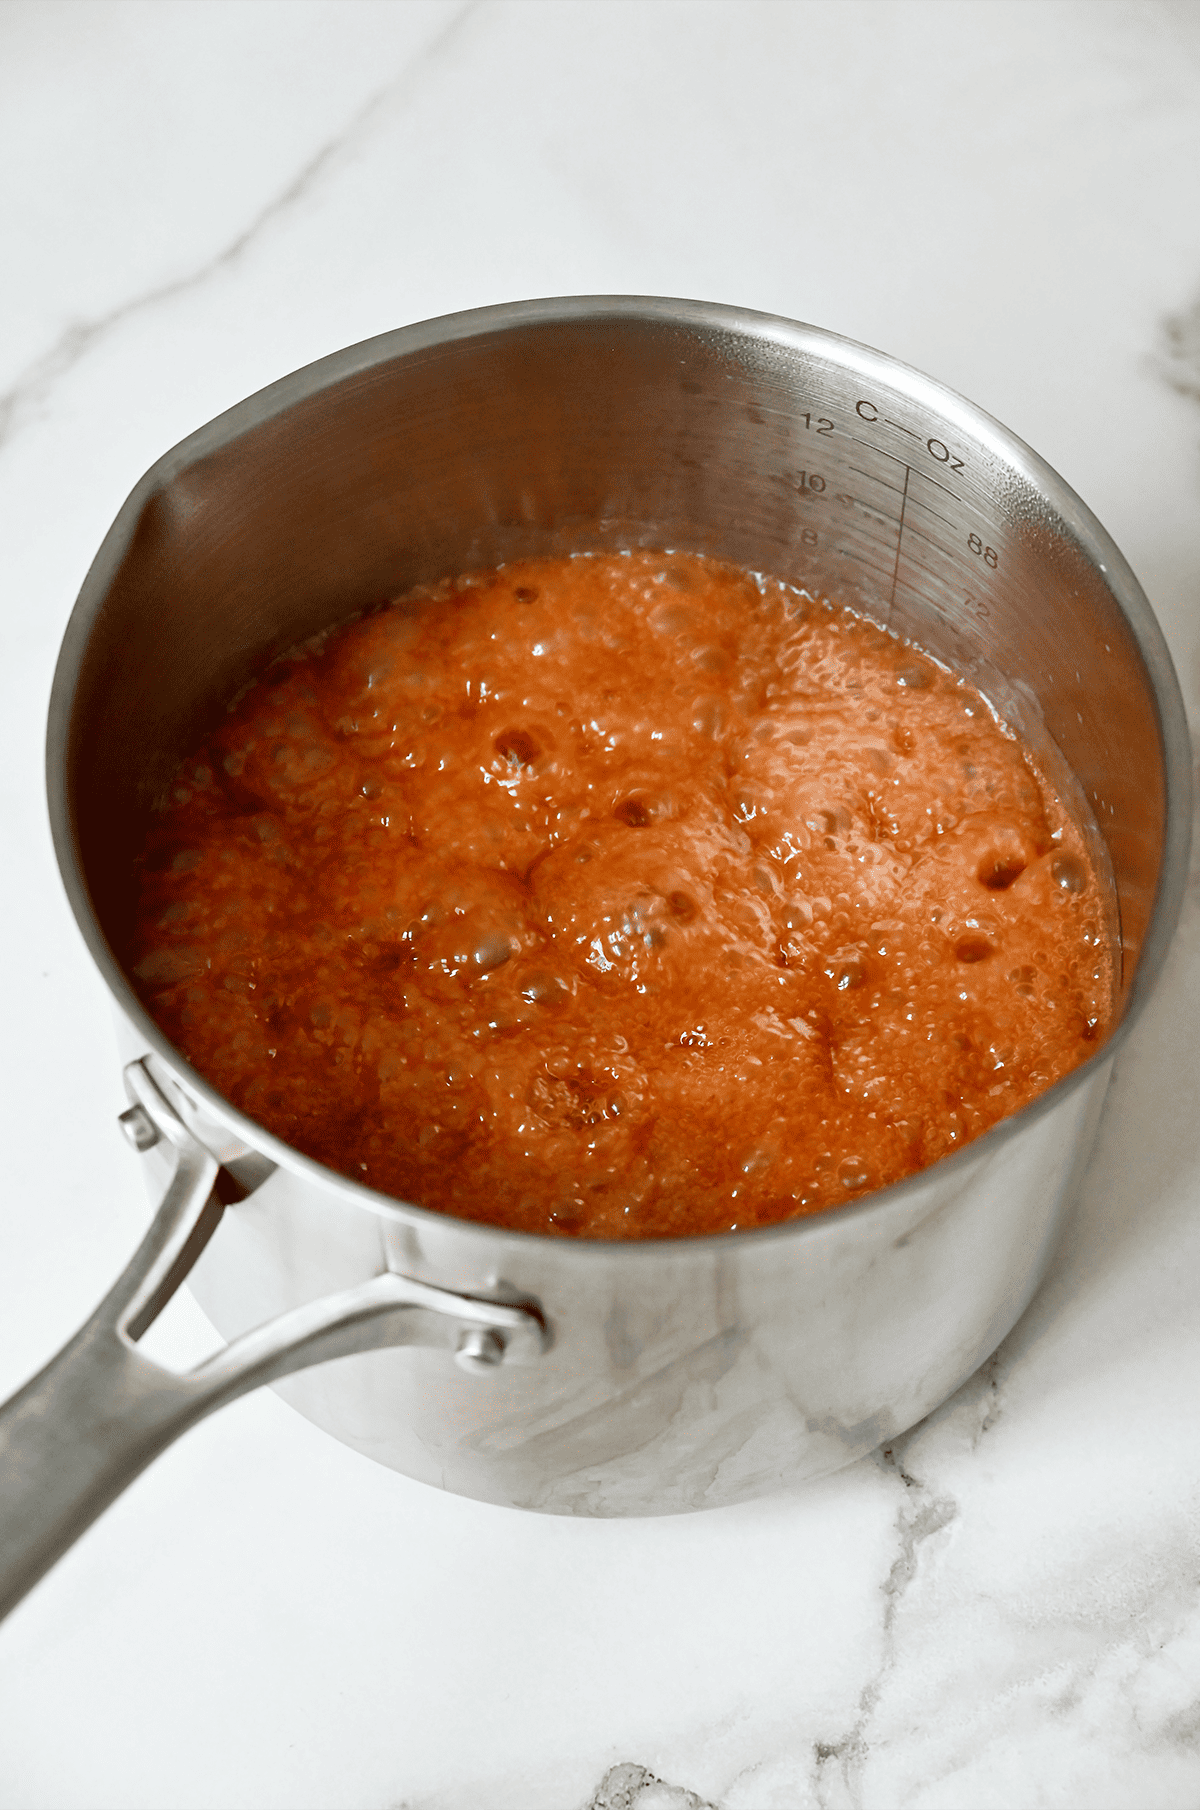 Caramel gently bubbling in a saucepan.